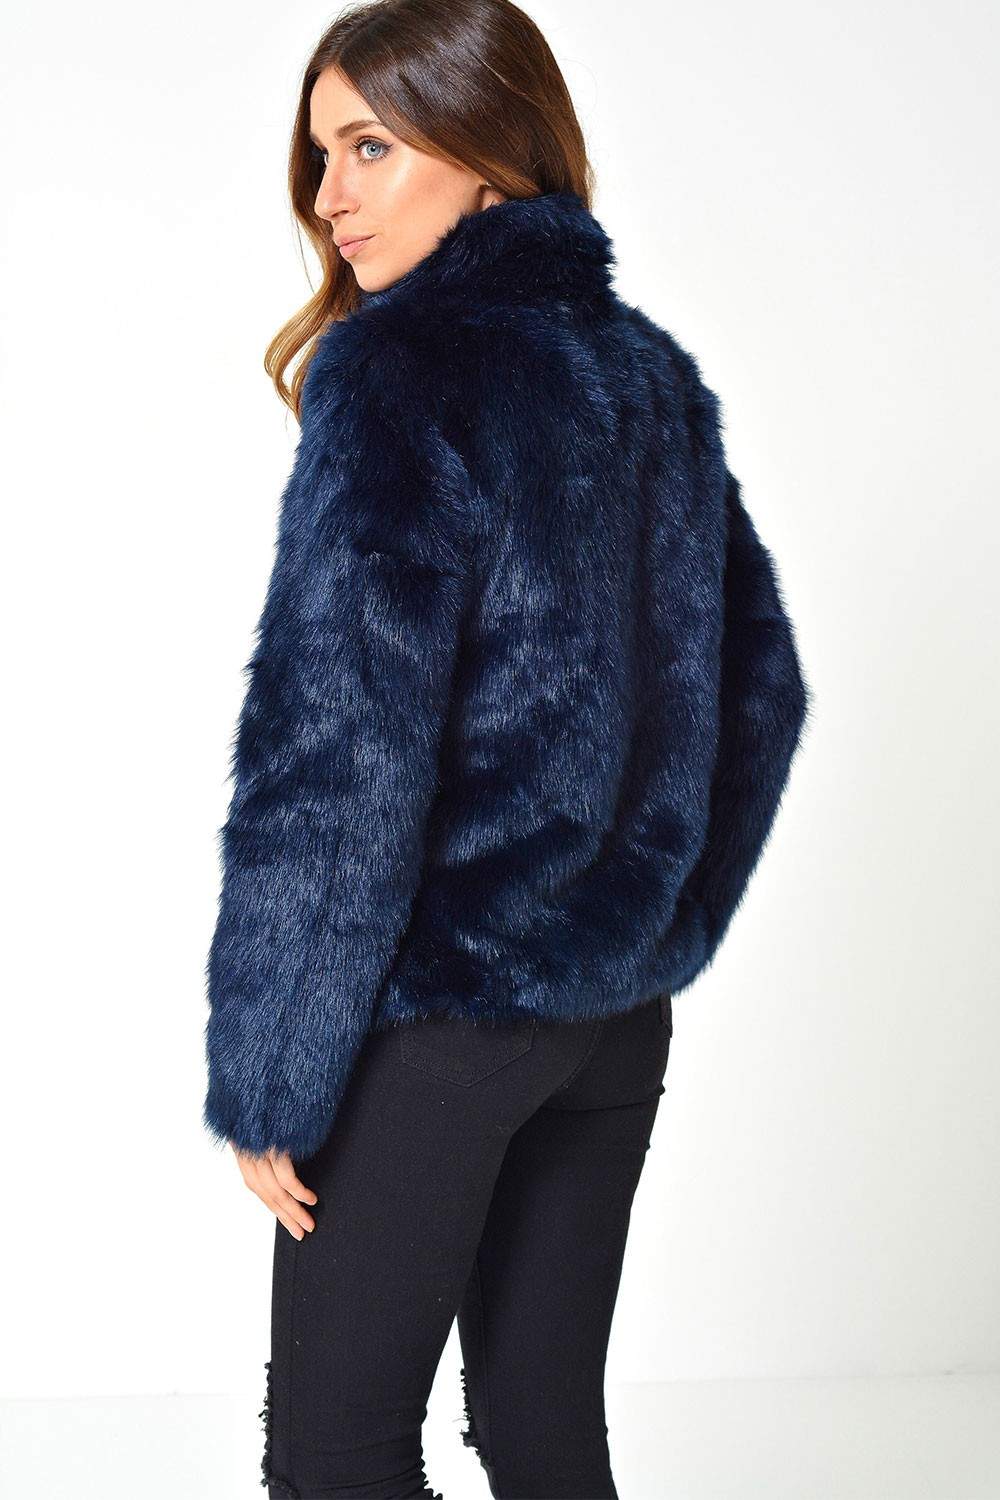 Vero Moda Bella Short Faux Fur Jacket in Navy | iCLOTHING